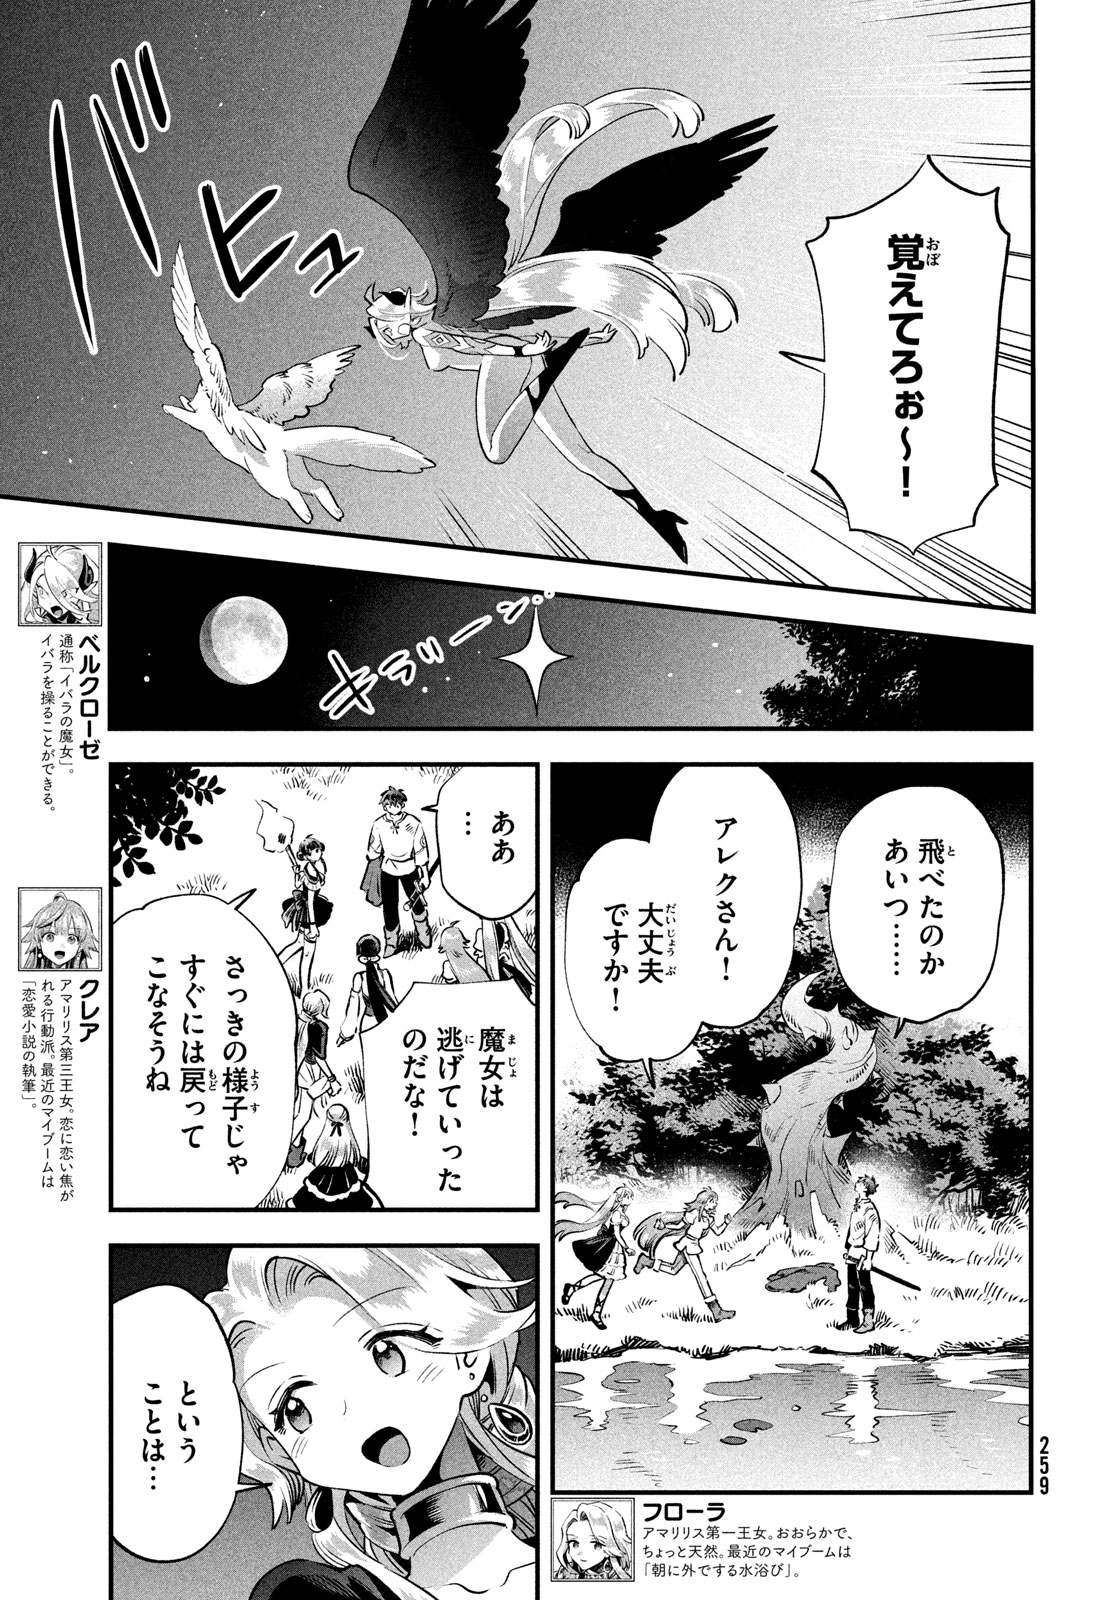 7-nin no Nemuri Hime - Chapter 48 - Page 5